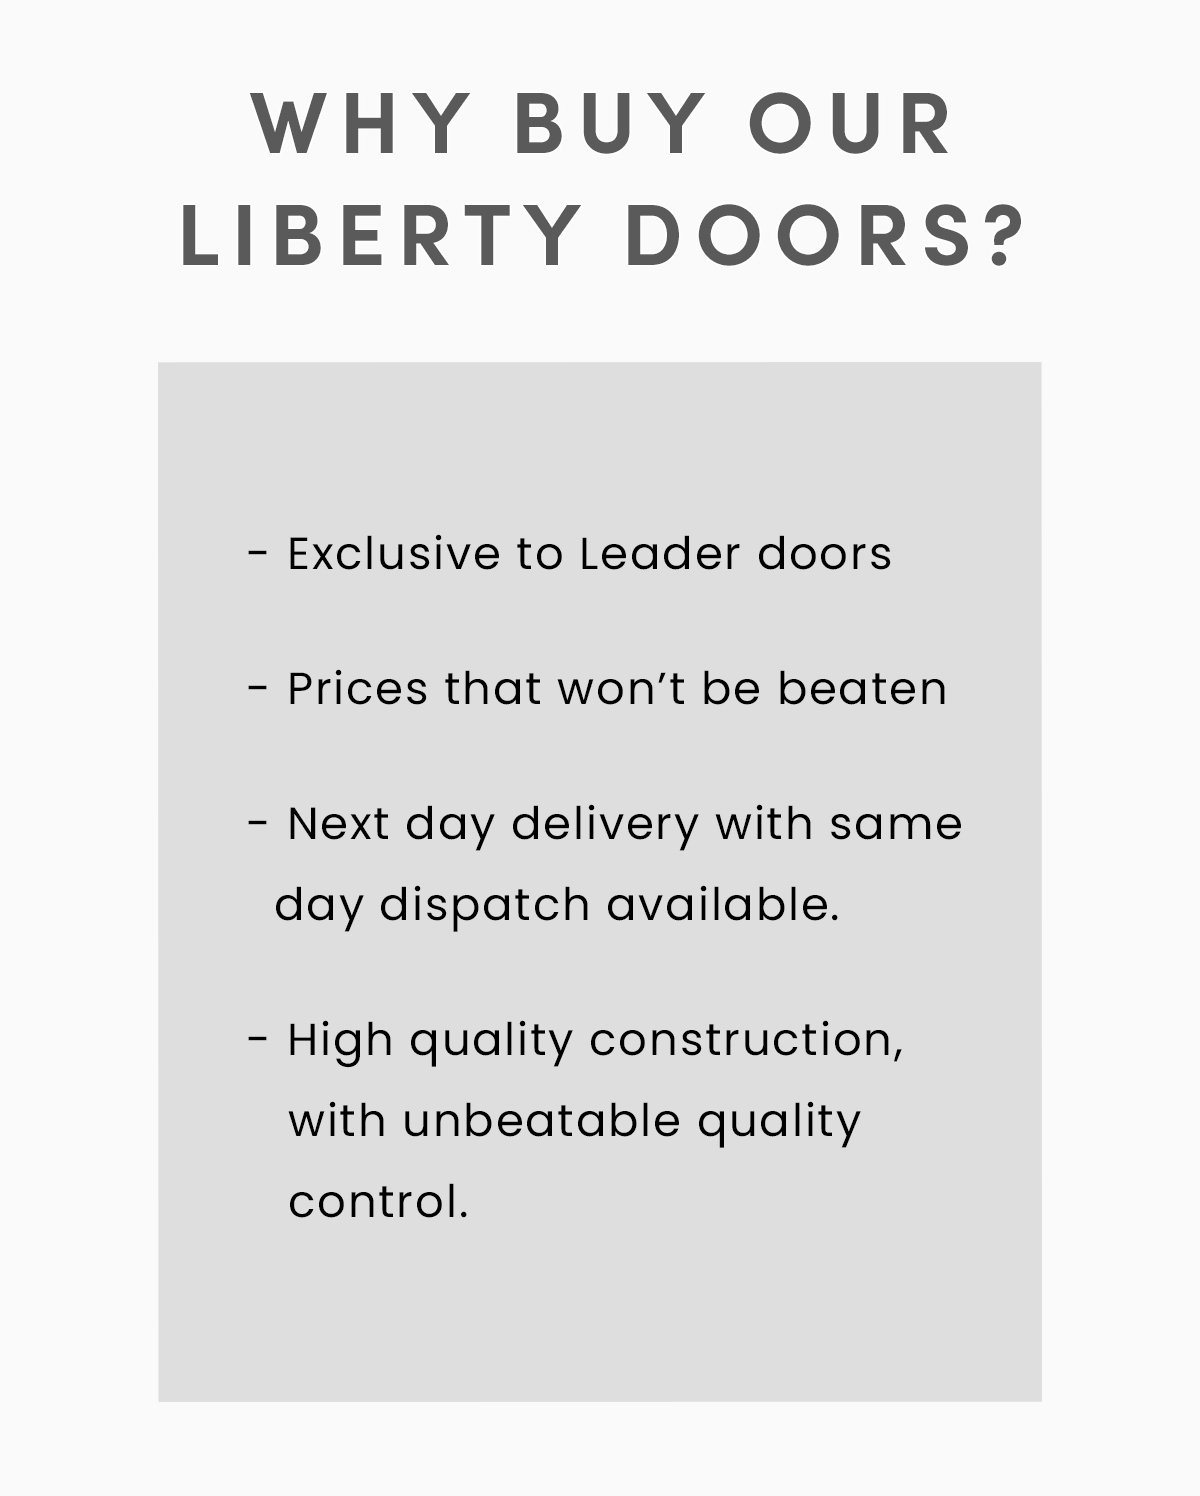 Liberty Doors Internal Silk Grey Fully Finished Farley Middleweight Door at  Leader Doors